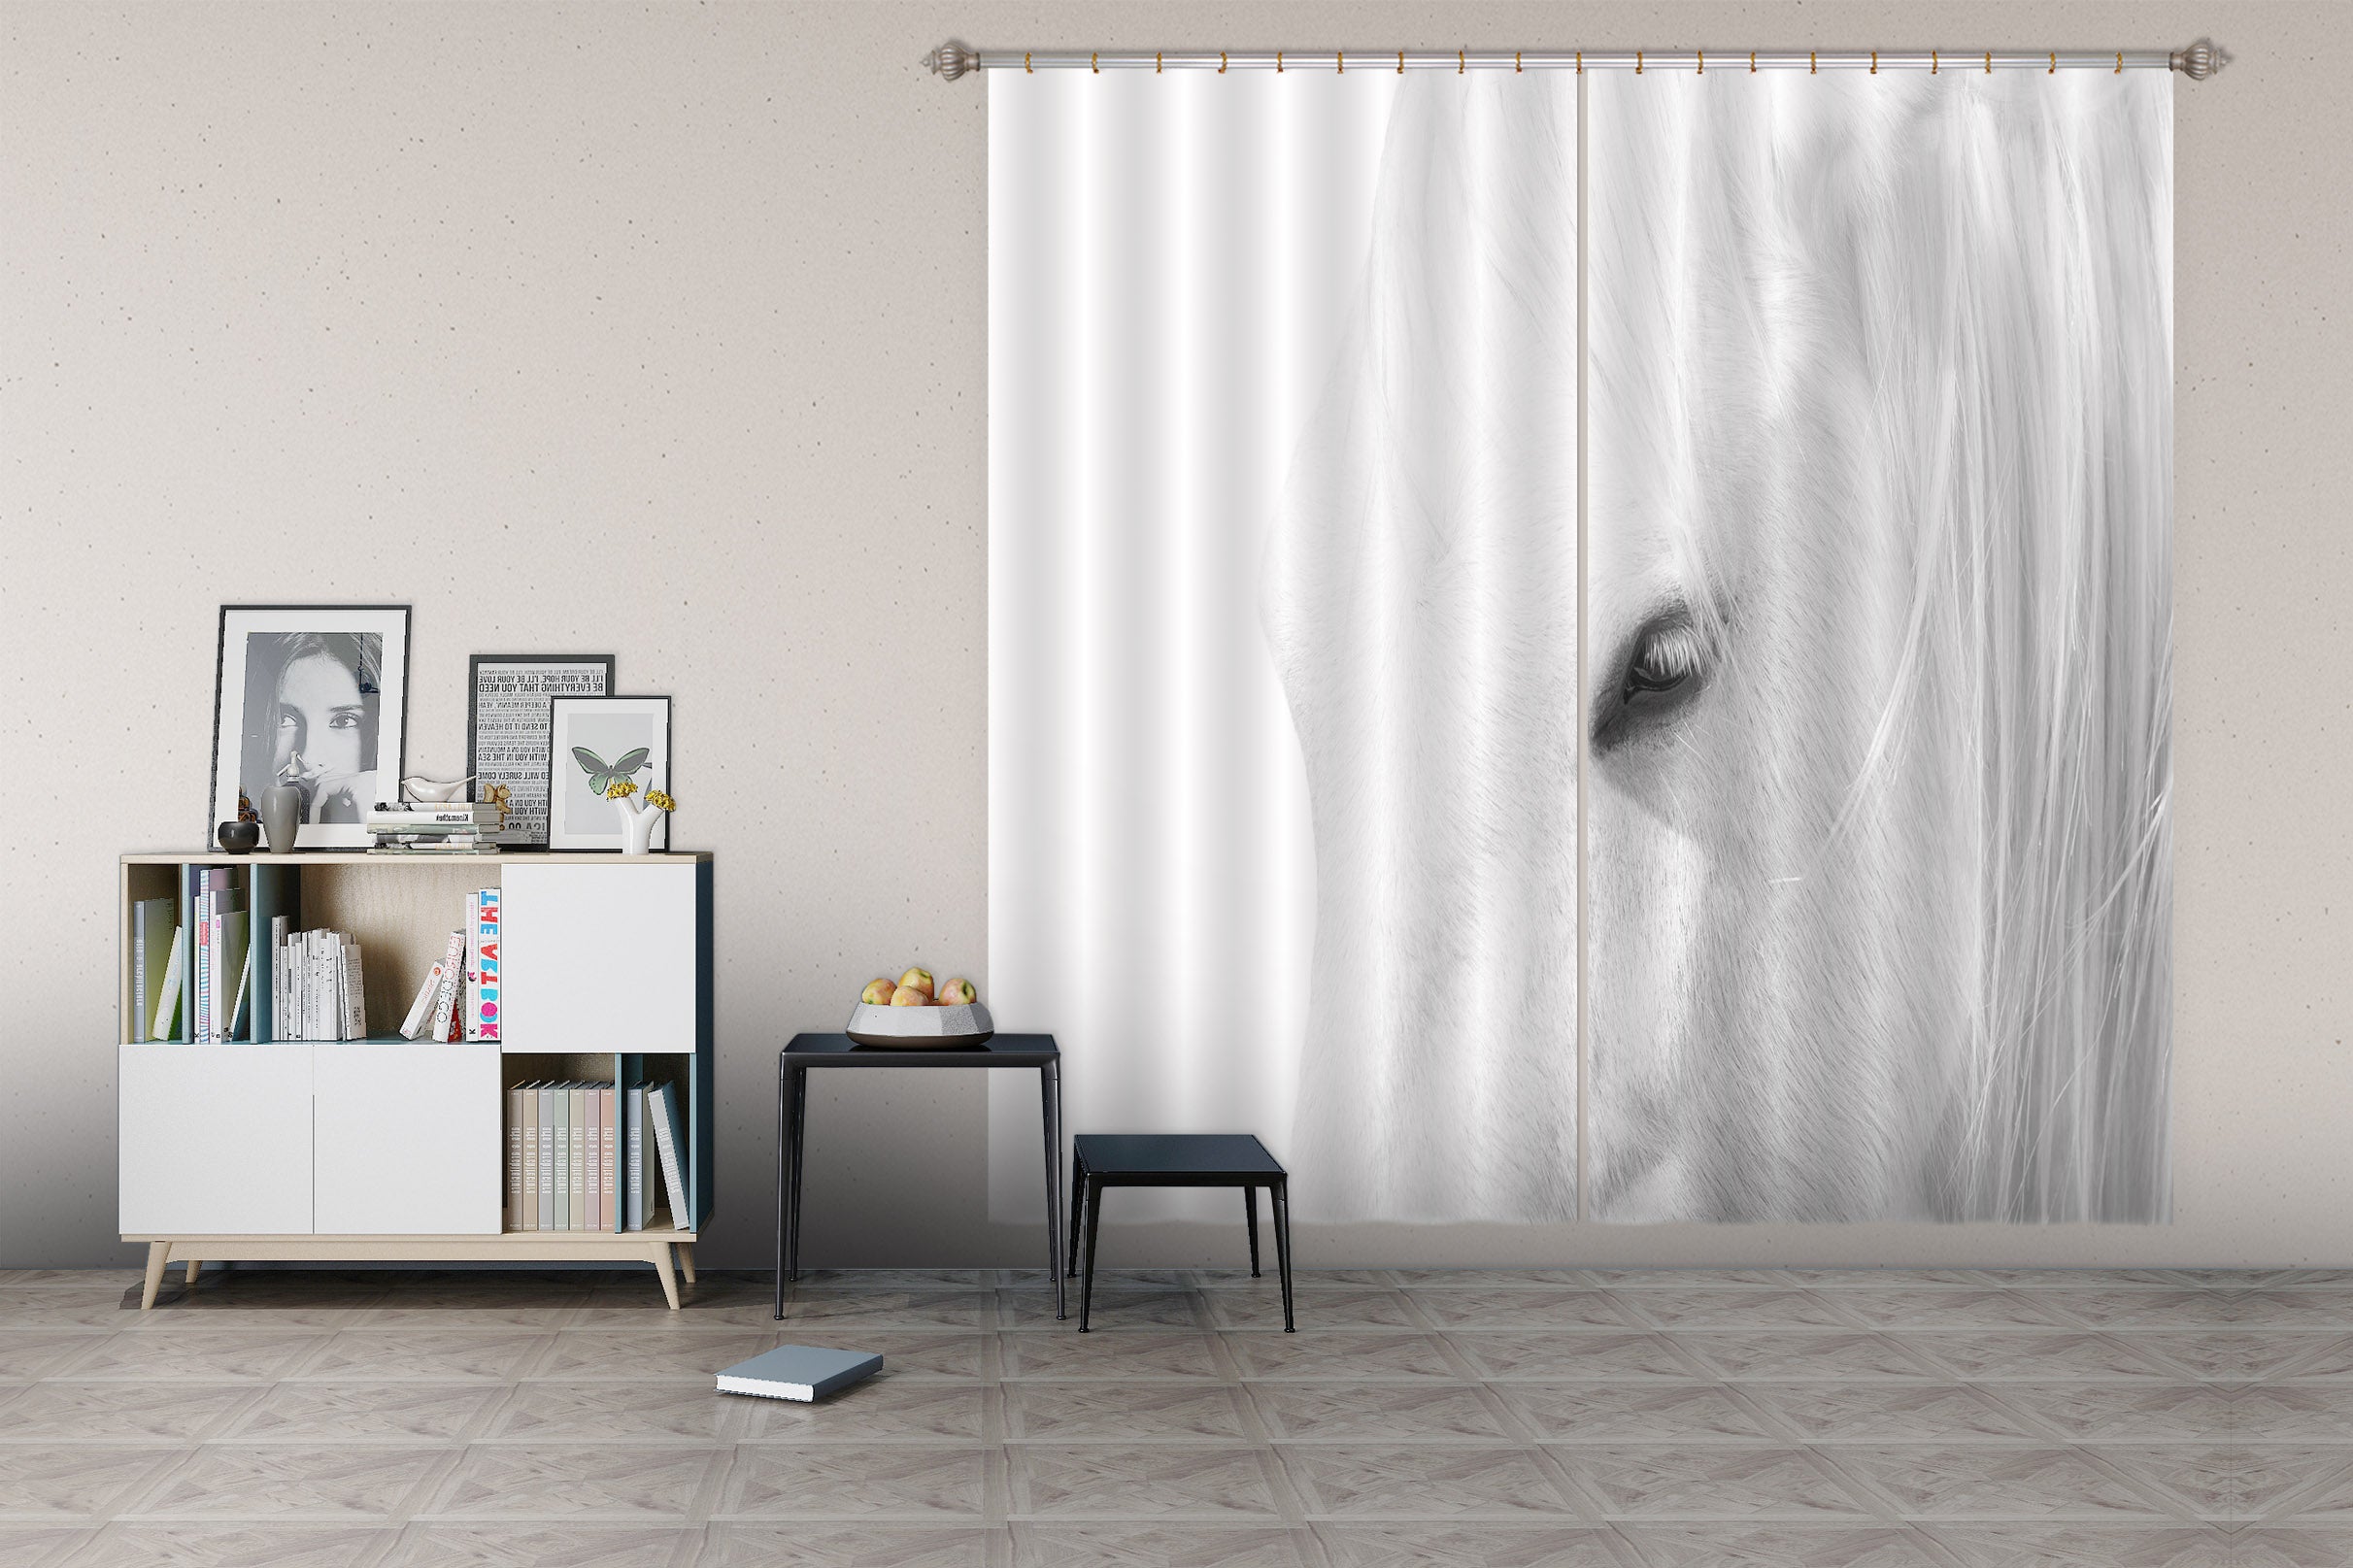 3D White Horse 185 Marco Carmassi Curtain Curtains Drapes